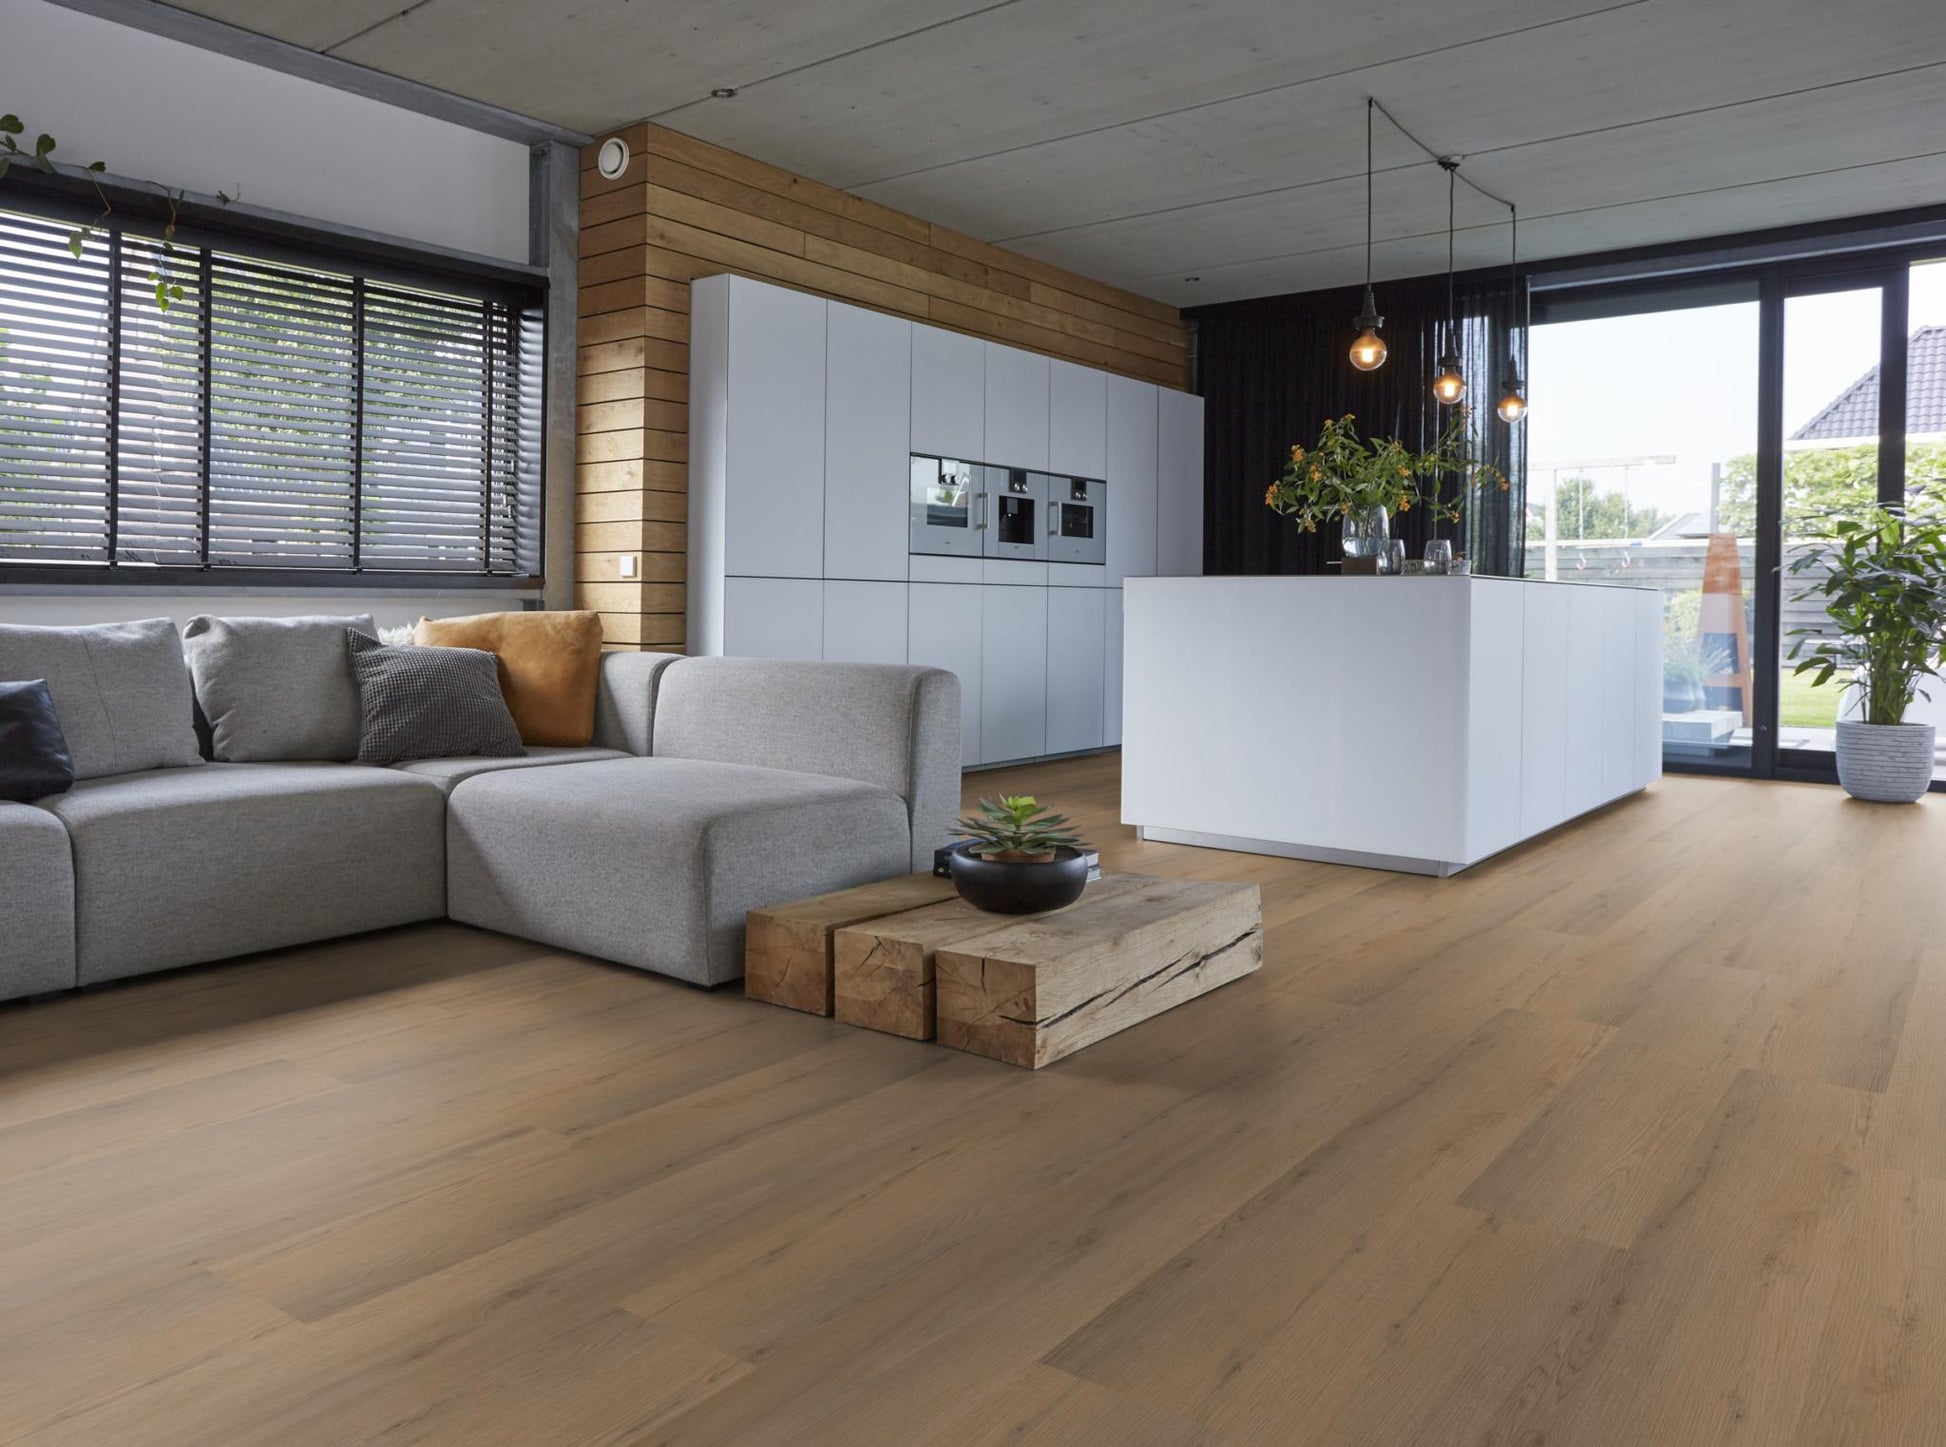 Floorlife Click PVC Barnet Dark Oak 8611 - Solza.nl